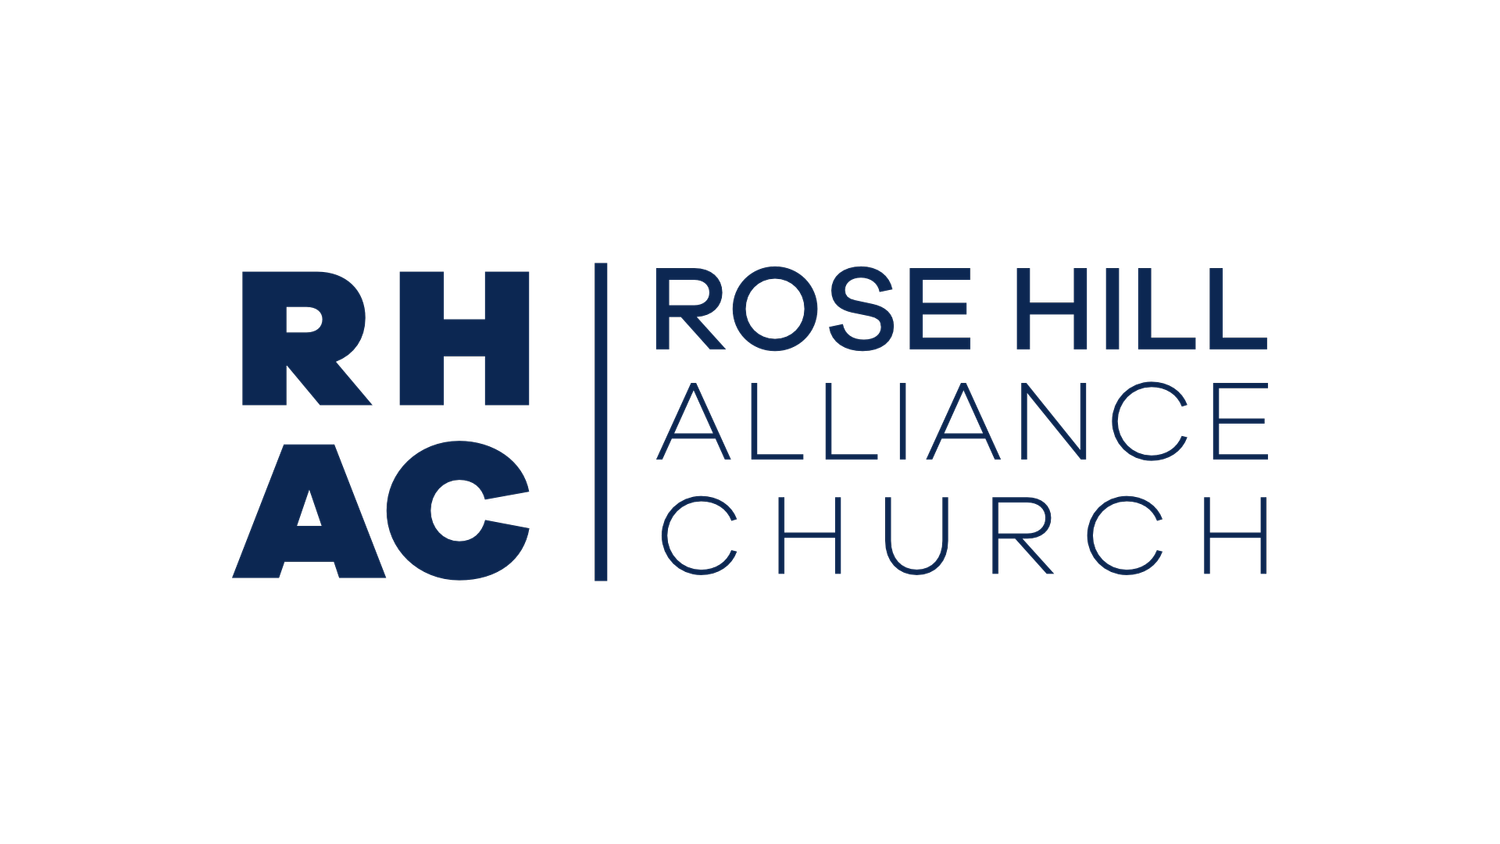   ROSE HILL ALLIANCE CHURCH